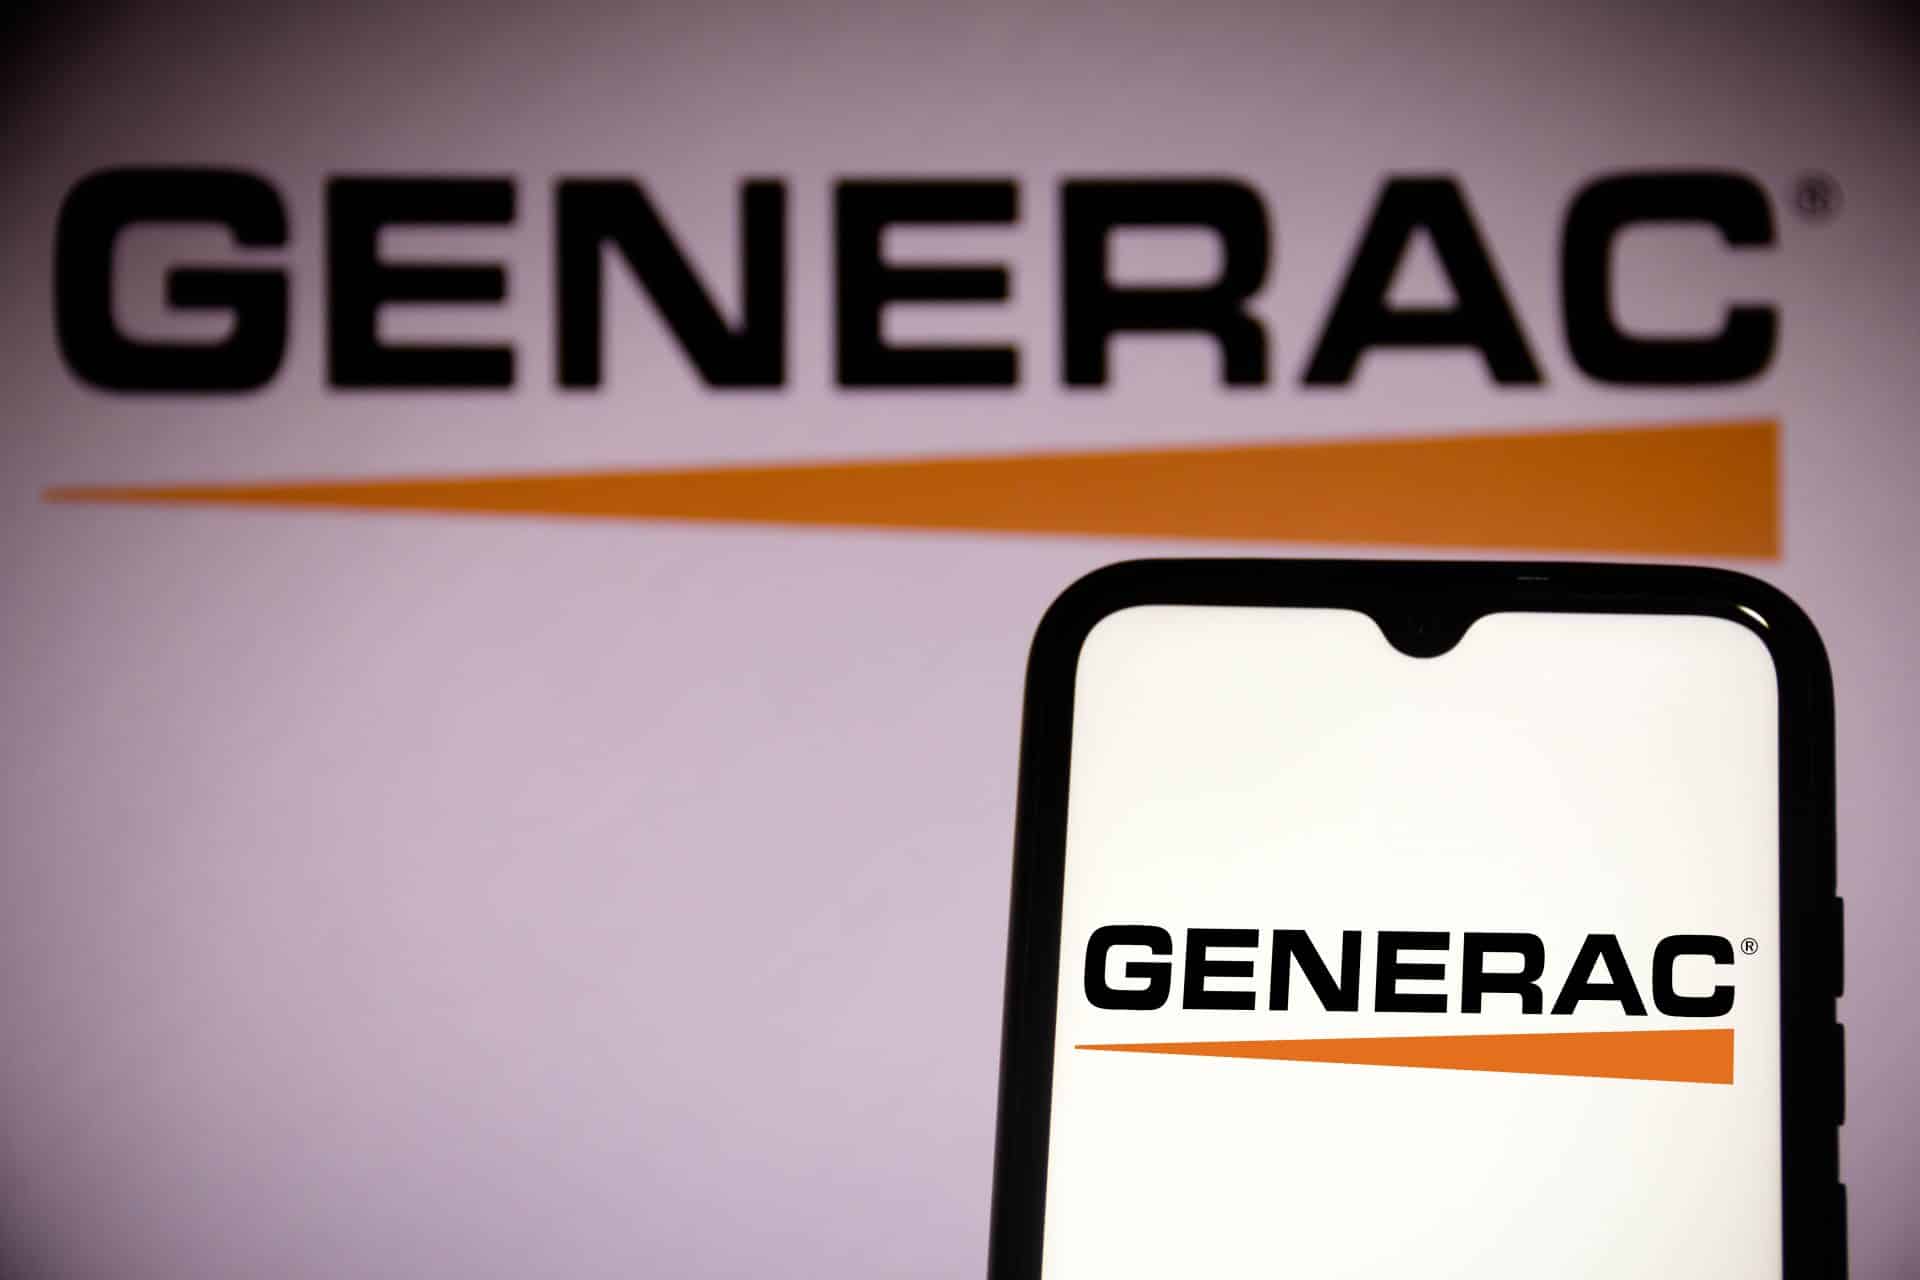 Generac Generator is a Good Idea or Bad!